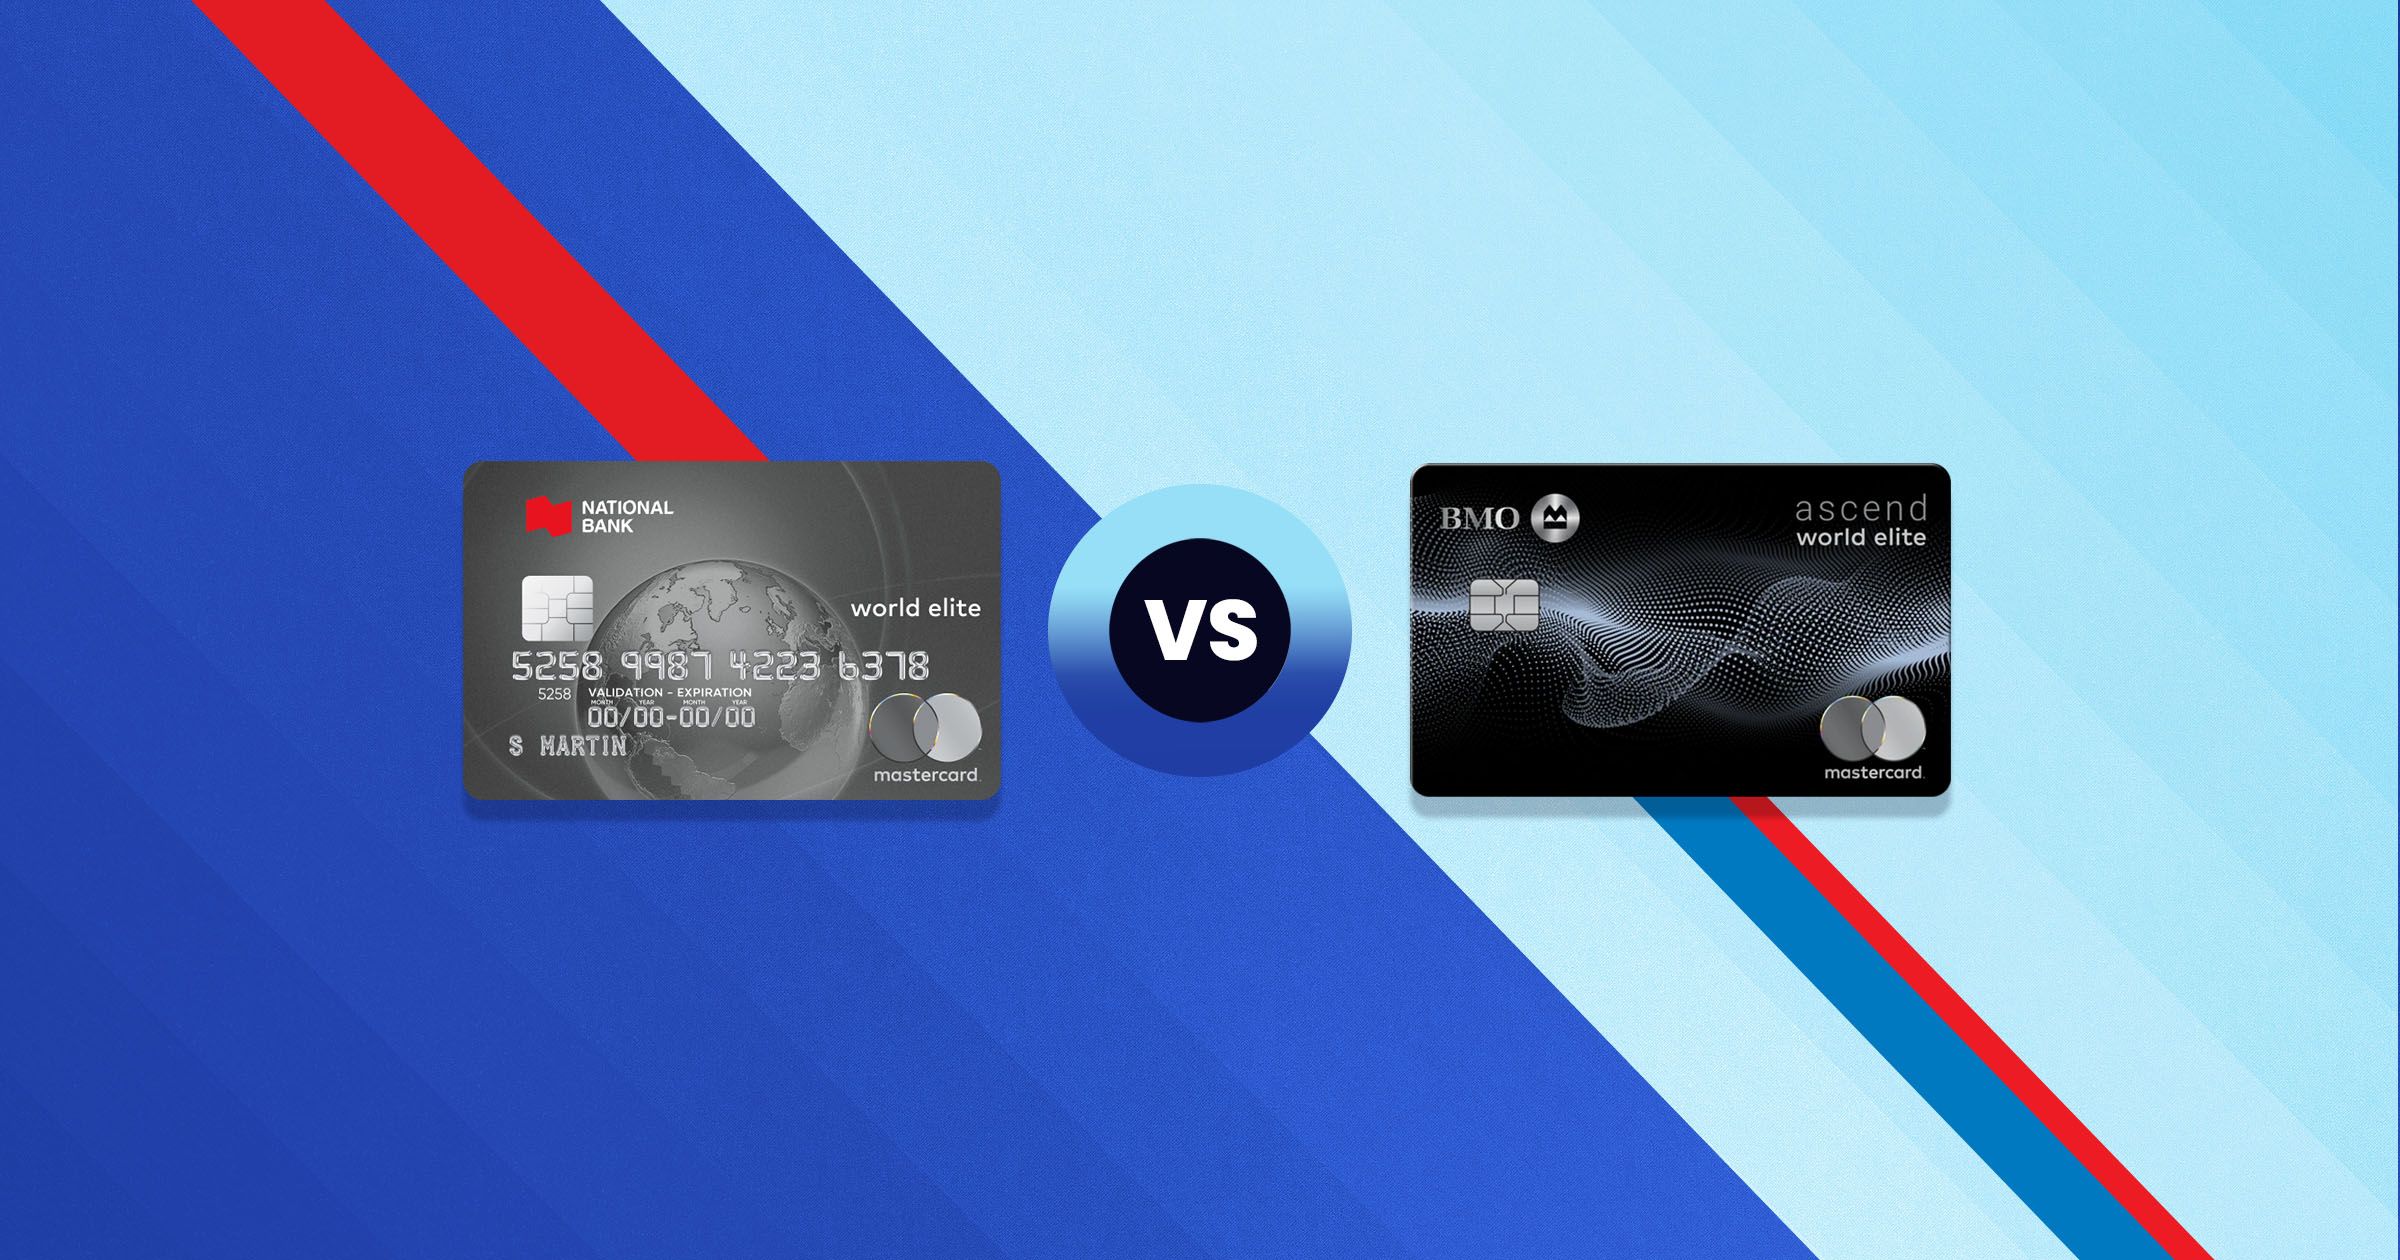 BMO Ascend World Elite Mastercard vs National Bank World Elite Mastercard